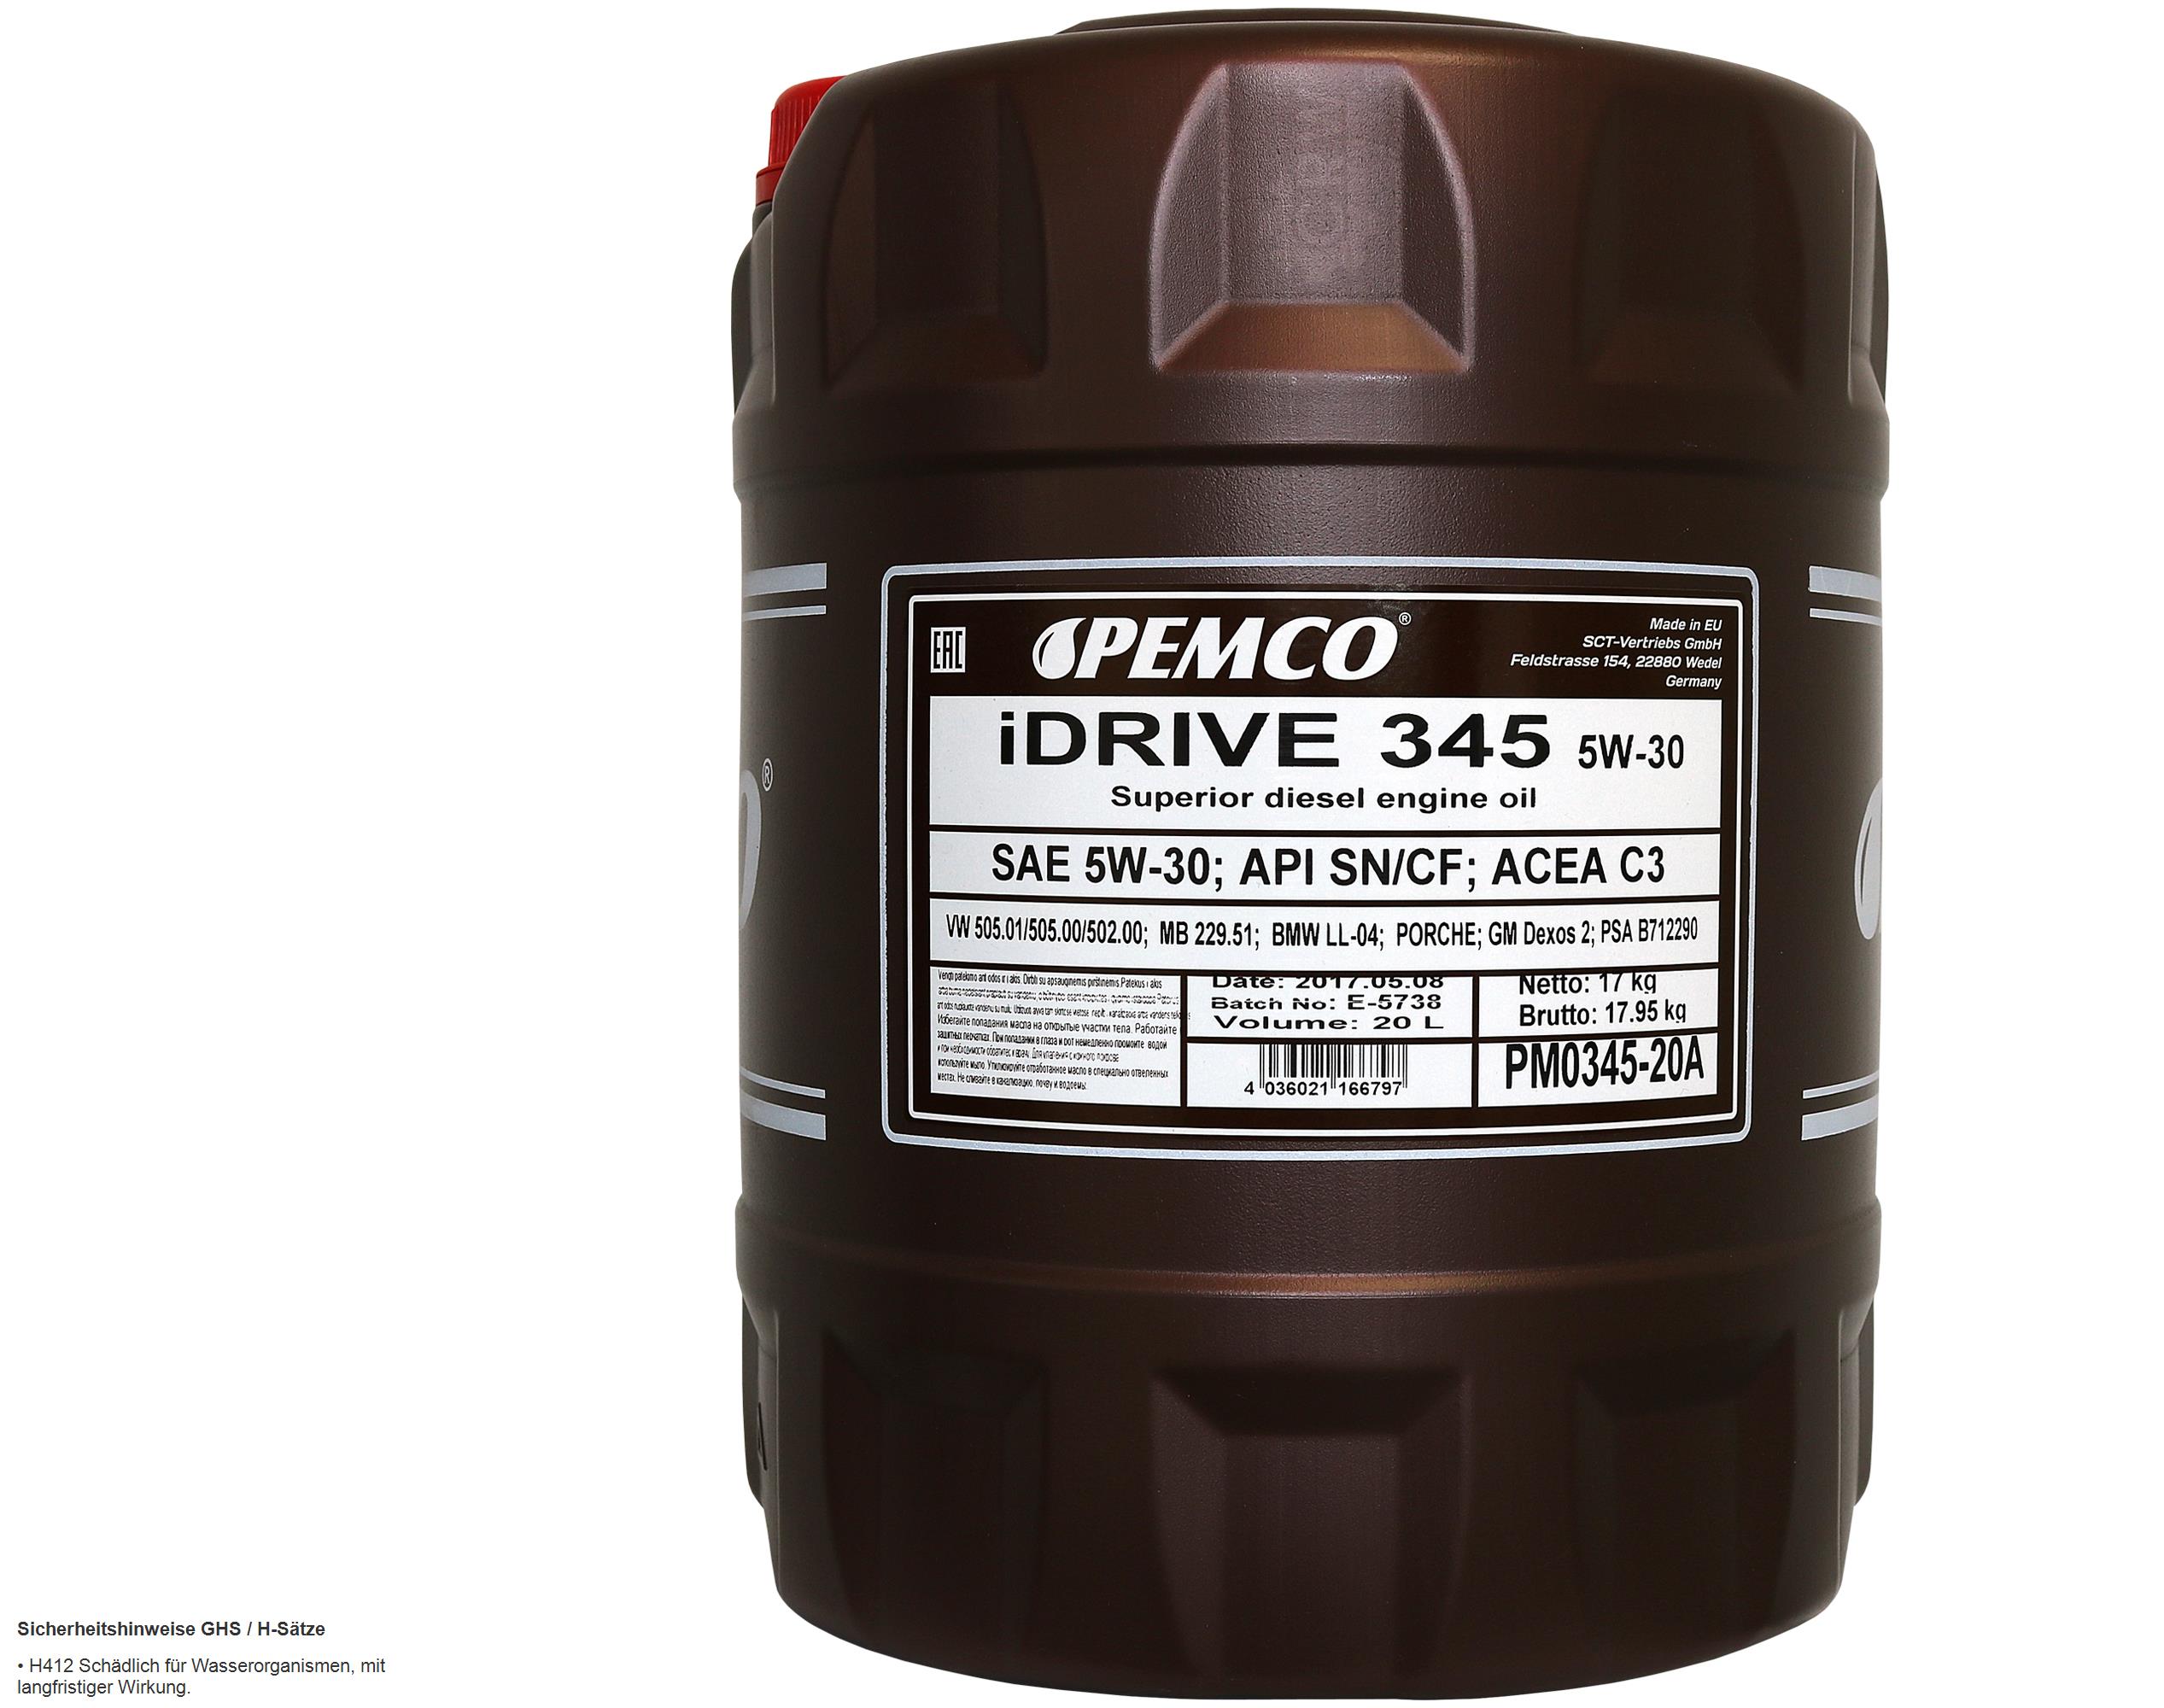 20 Liter Orignal PEMCO Motoröl iDRIVE 345 5W-30 API SN/CF Engine Oil Öl